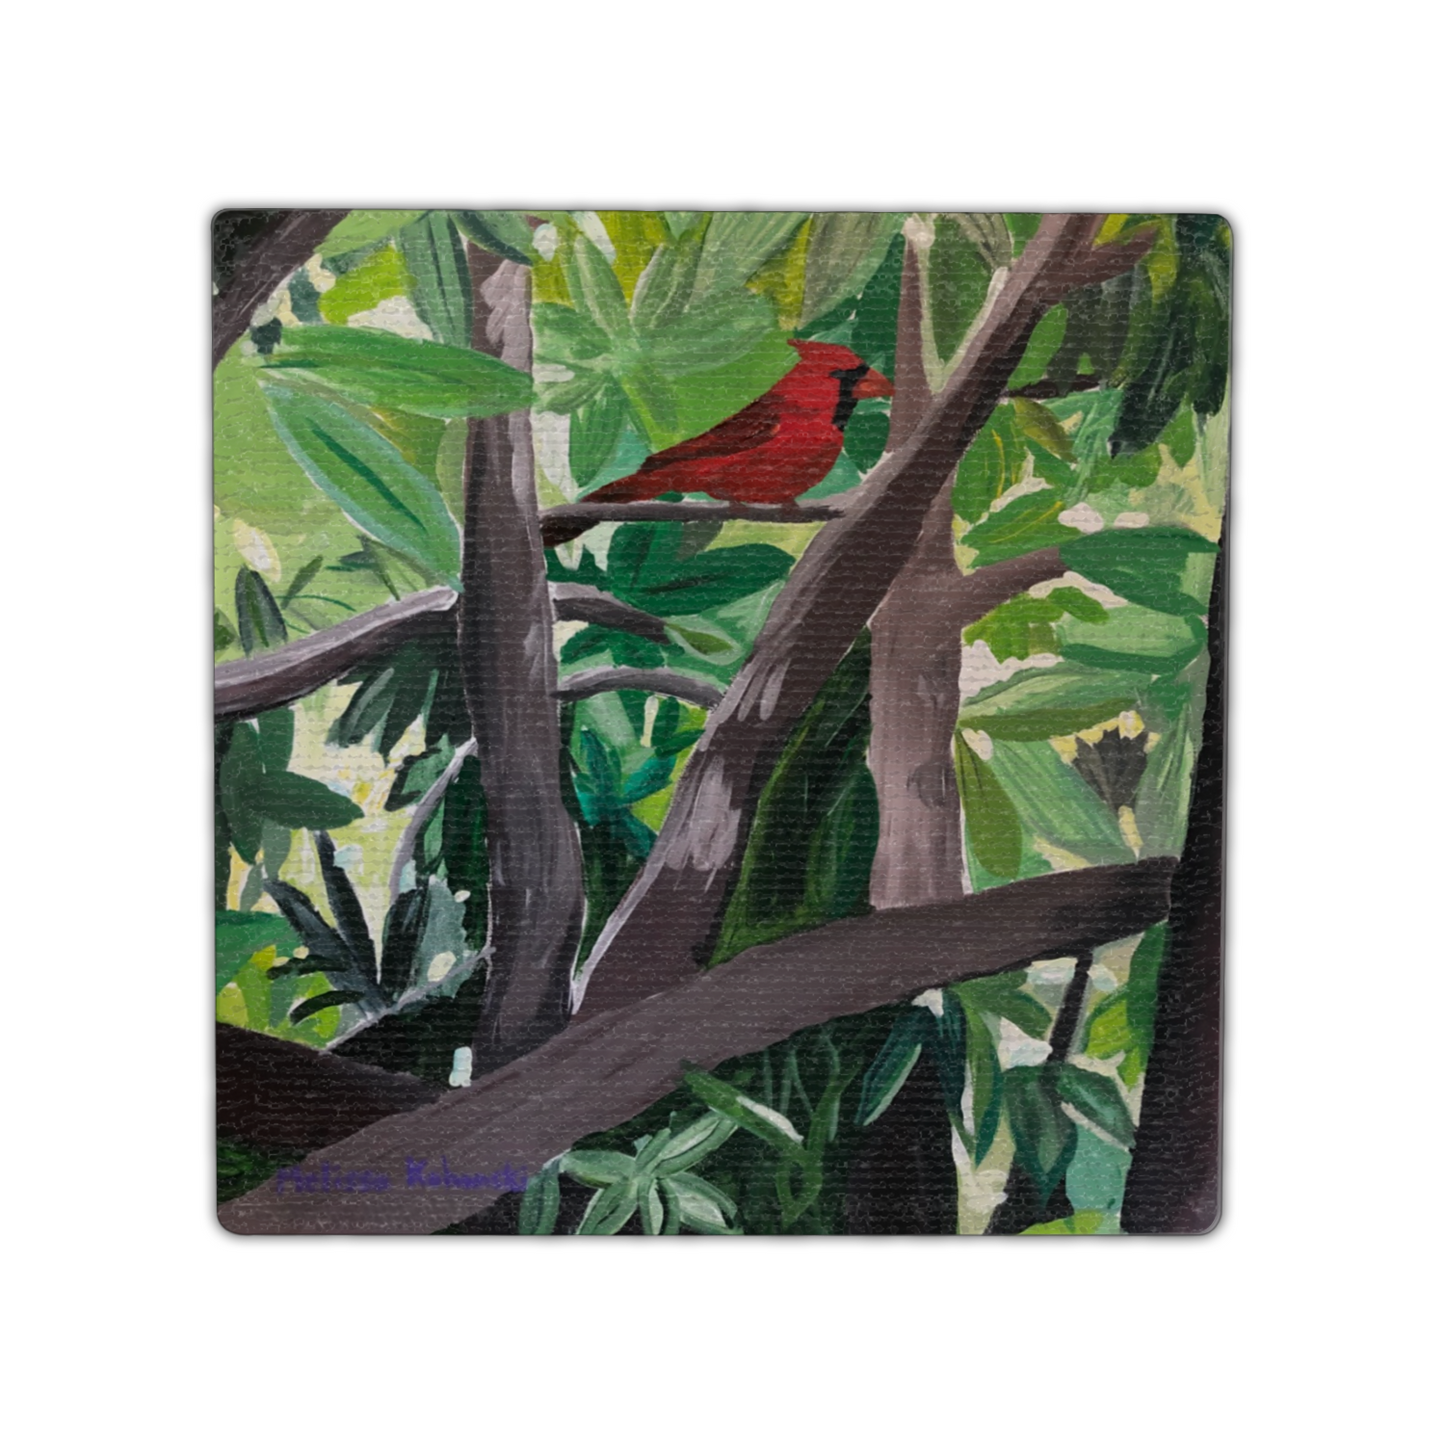 "Cardinal in a Tree" Single Linen Coaster